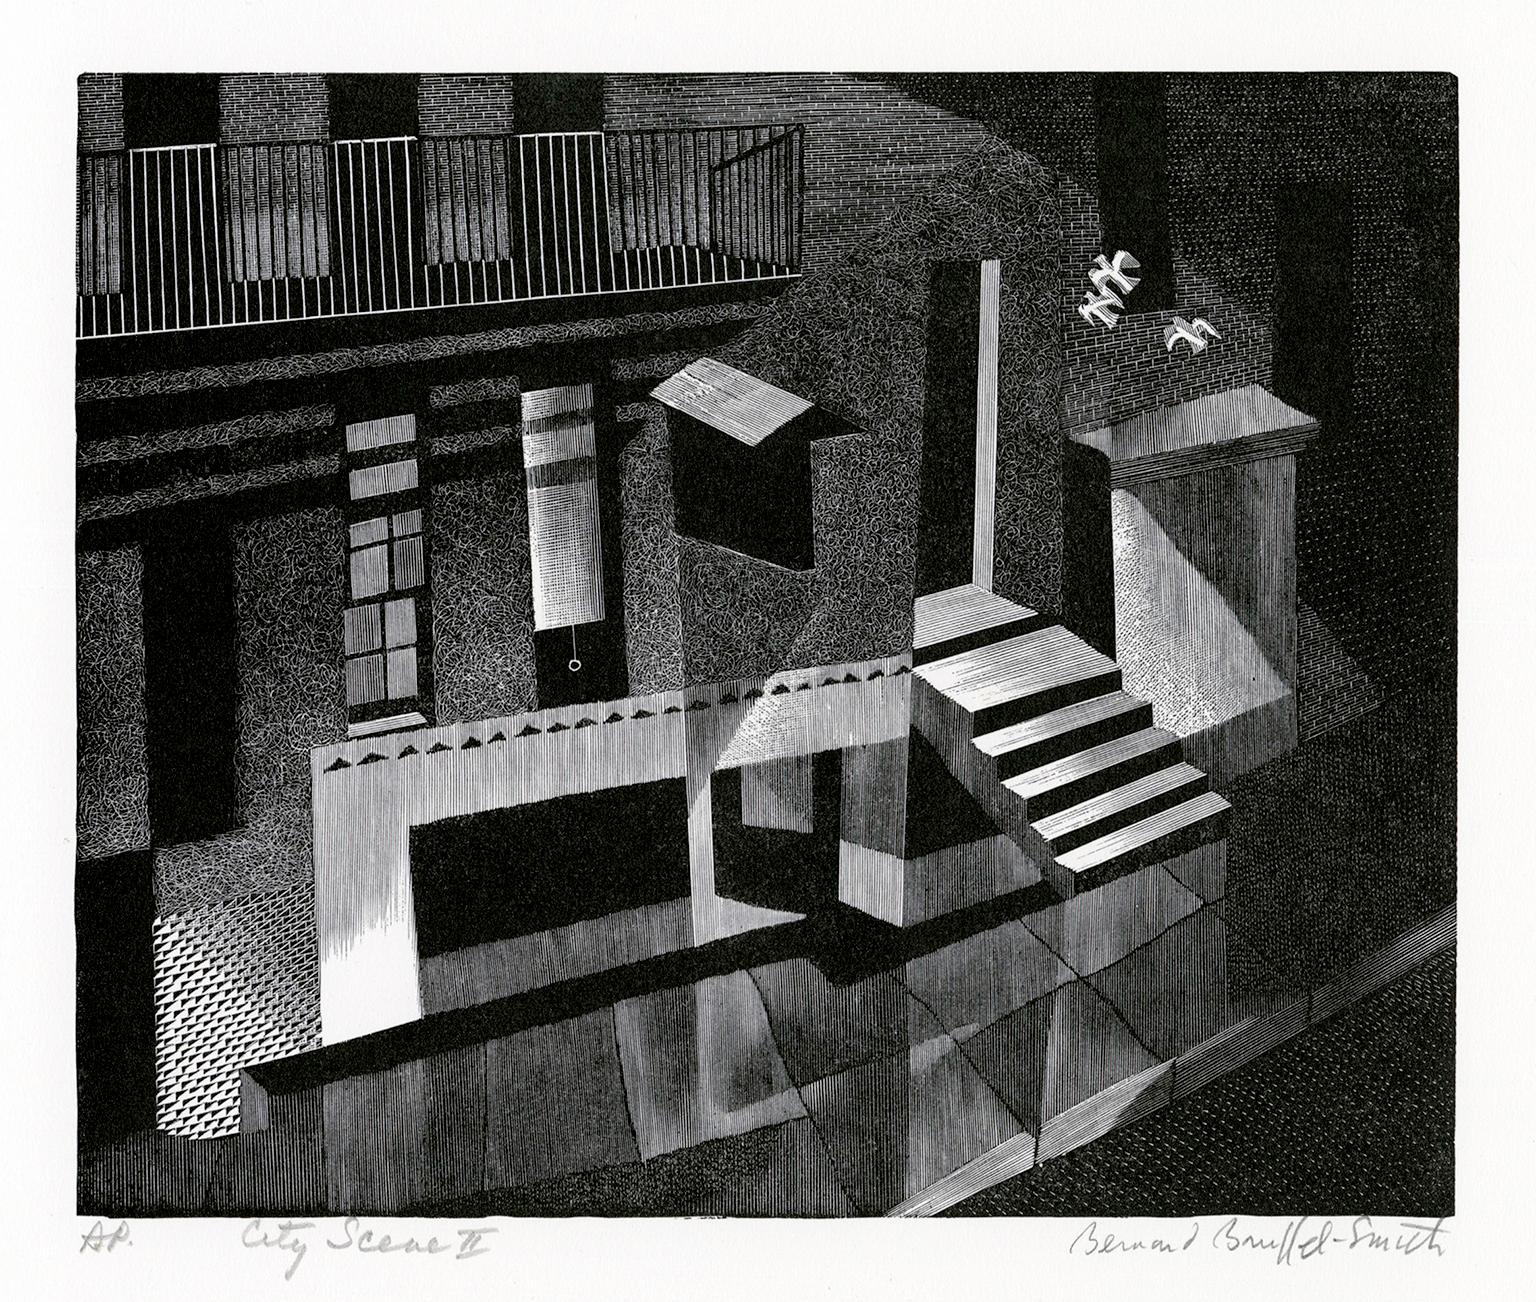 Bernard Brussel-Smith Figurative Print - City Scene II   — Mid-Century Modernism, Precisionism